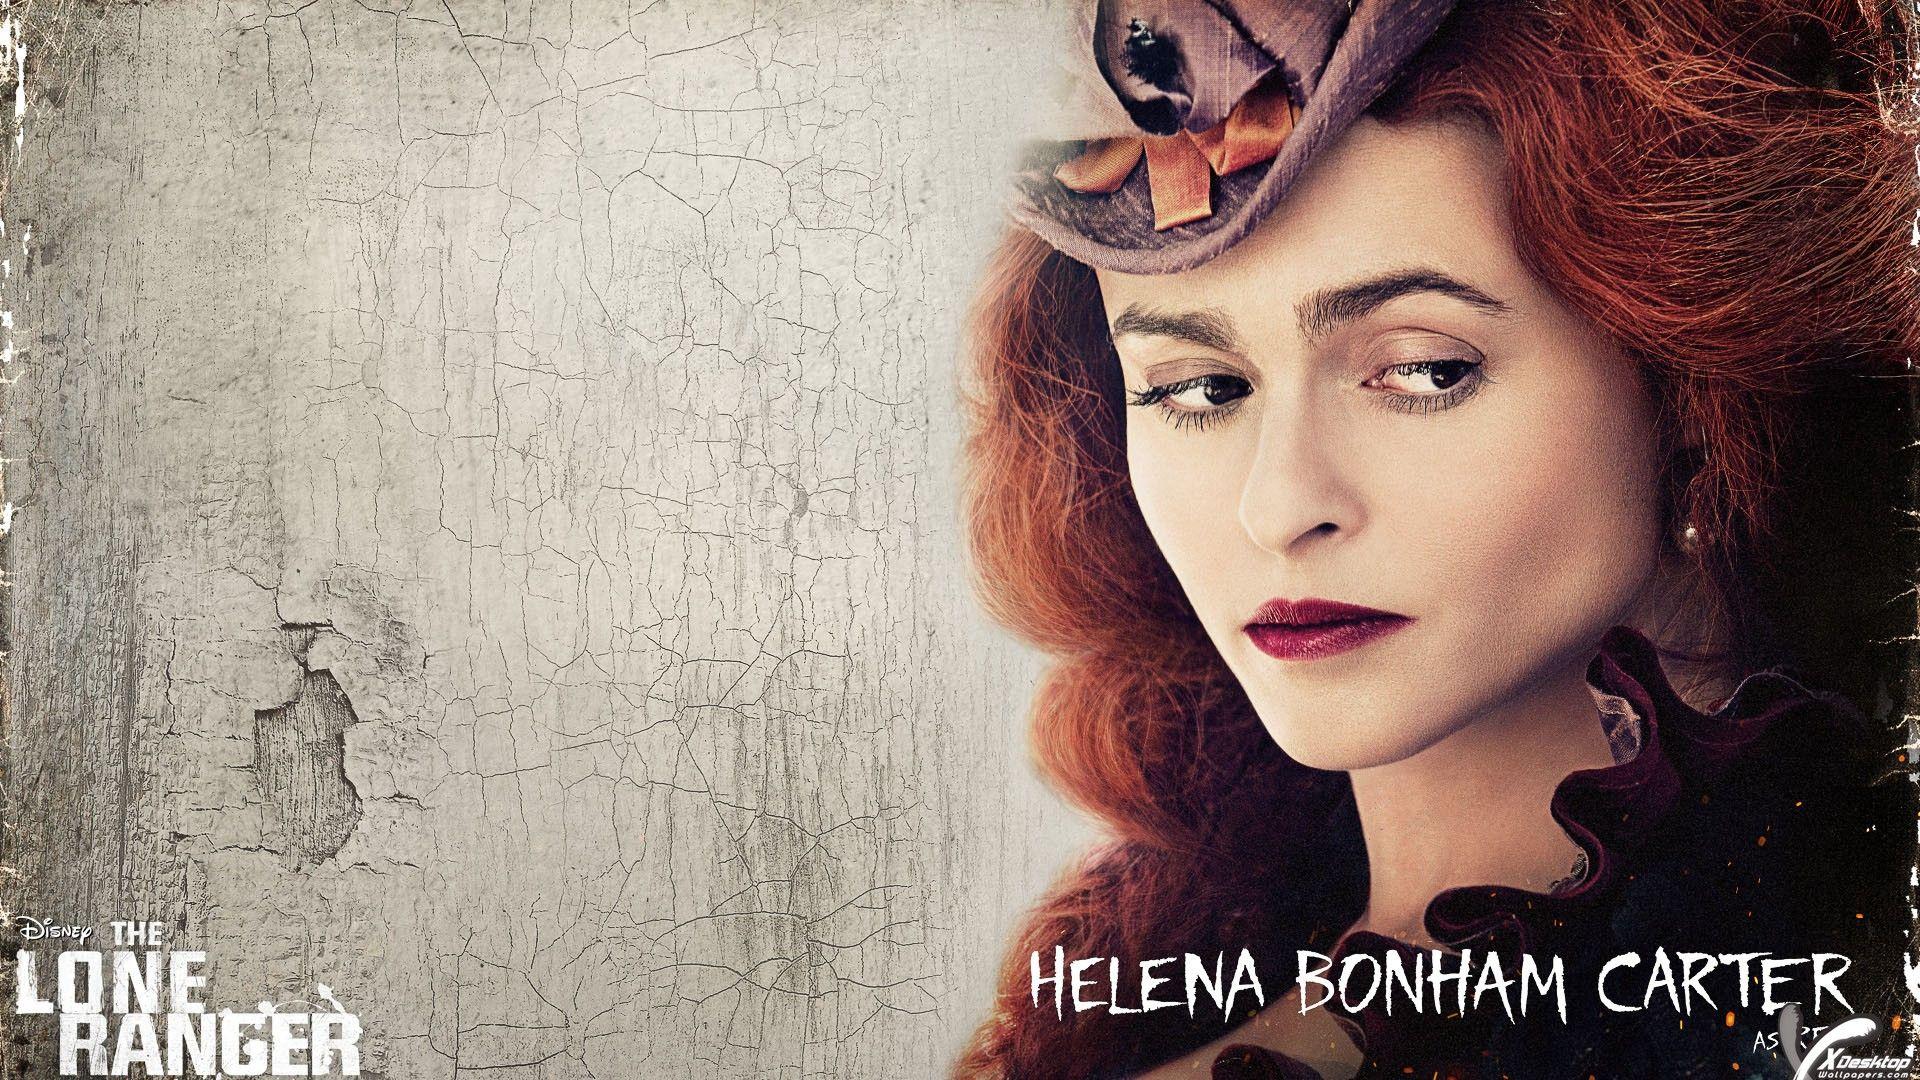 Helena Bonham Carter Wallpaper and Background Image